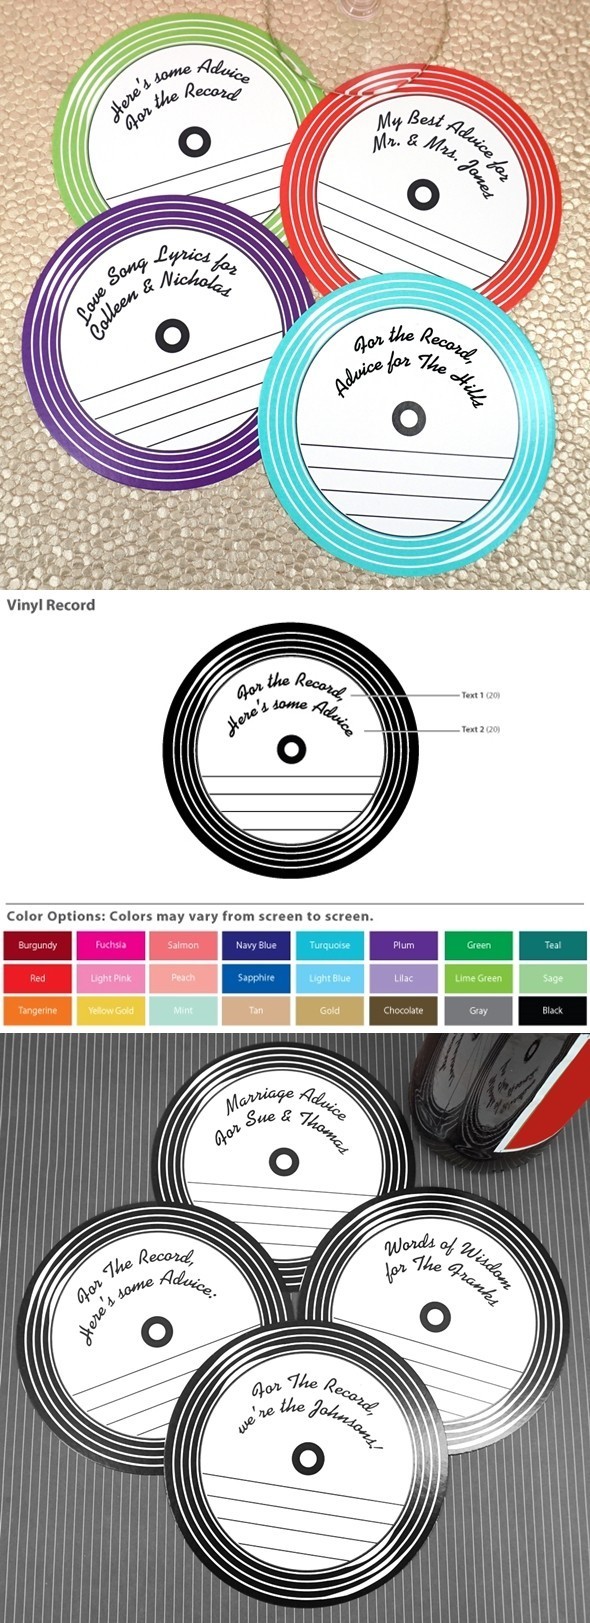 Personalized Vinyl Record Design Paper Advice Coasters (15 Colors)